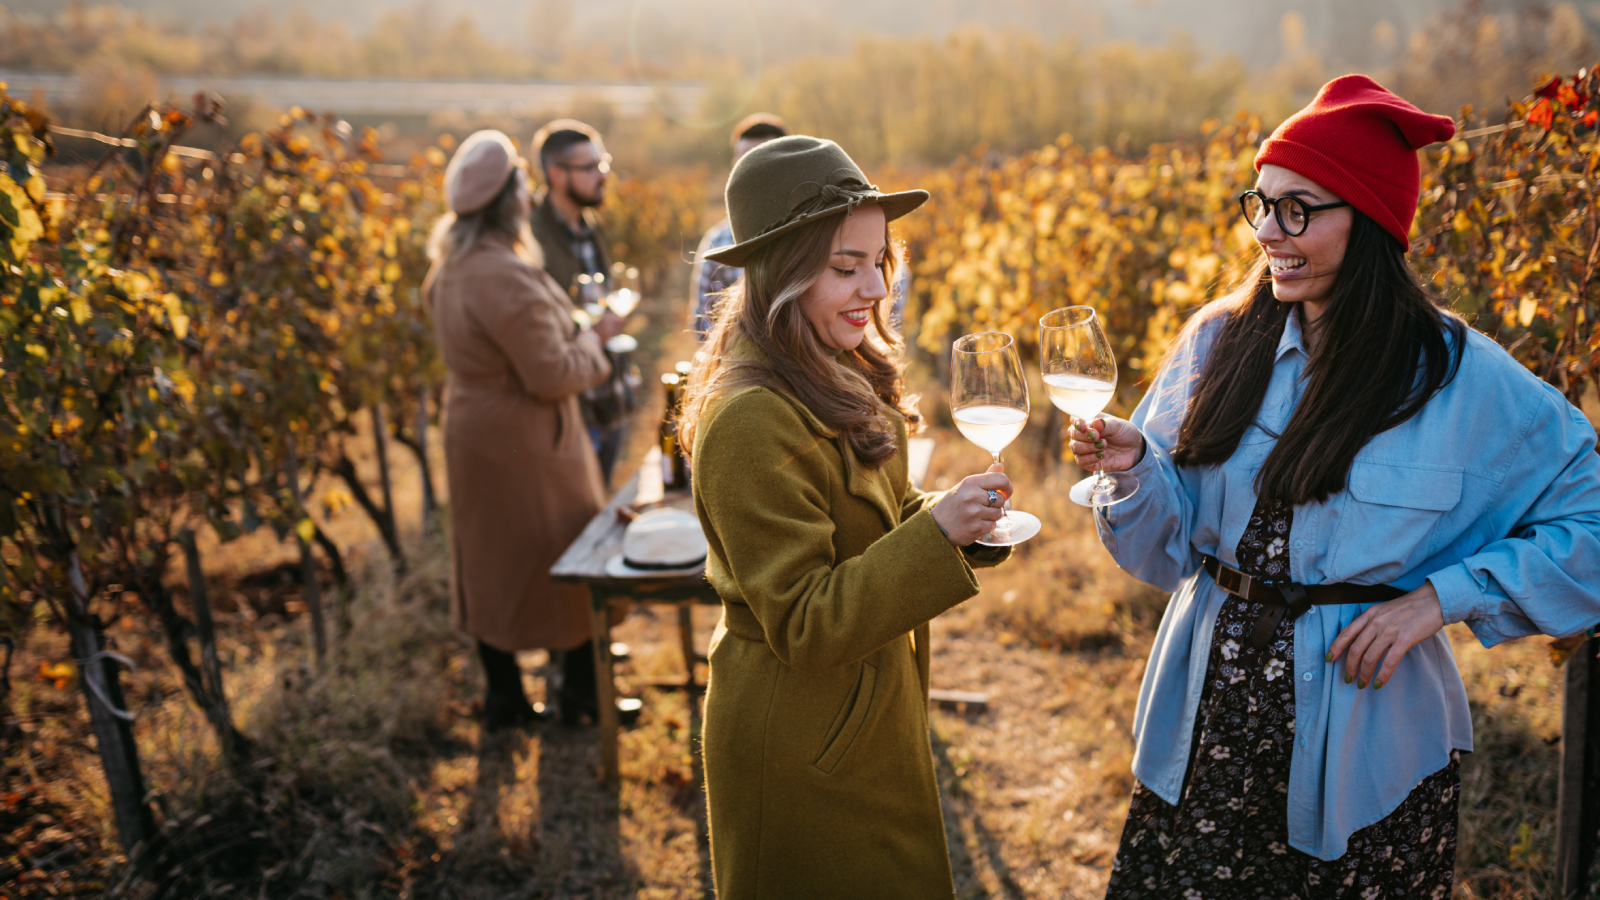 Two women wine tasting in a vineyard